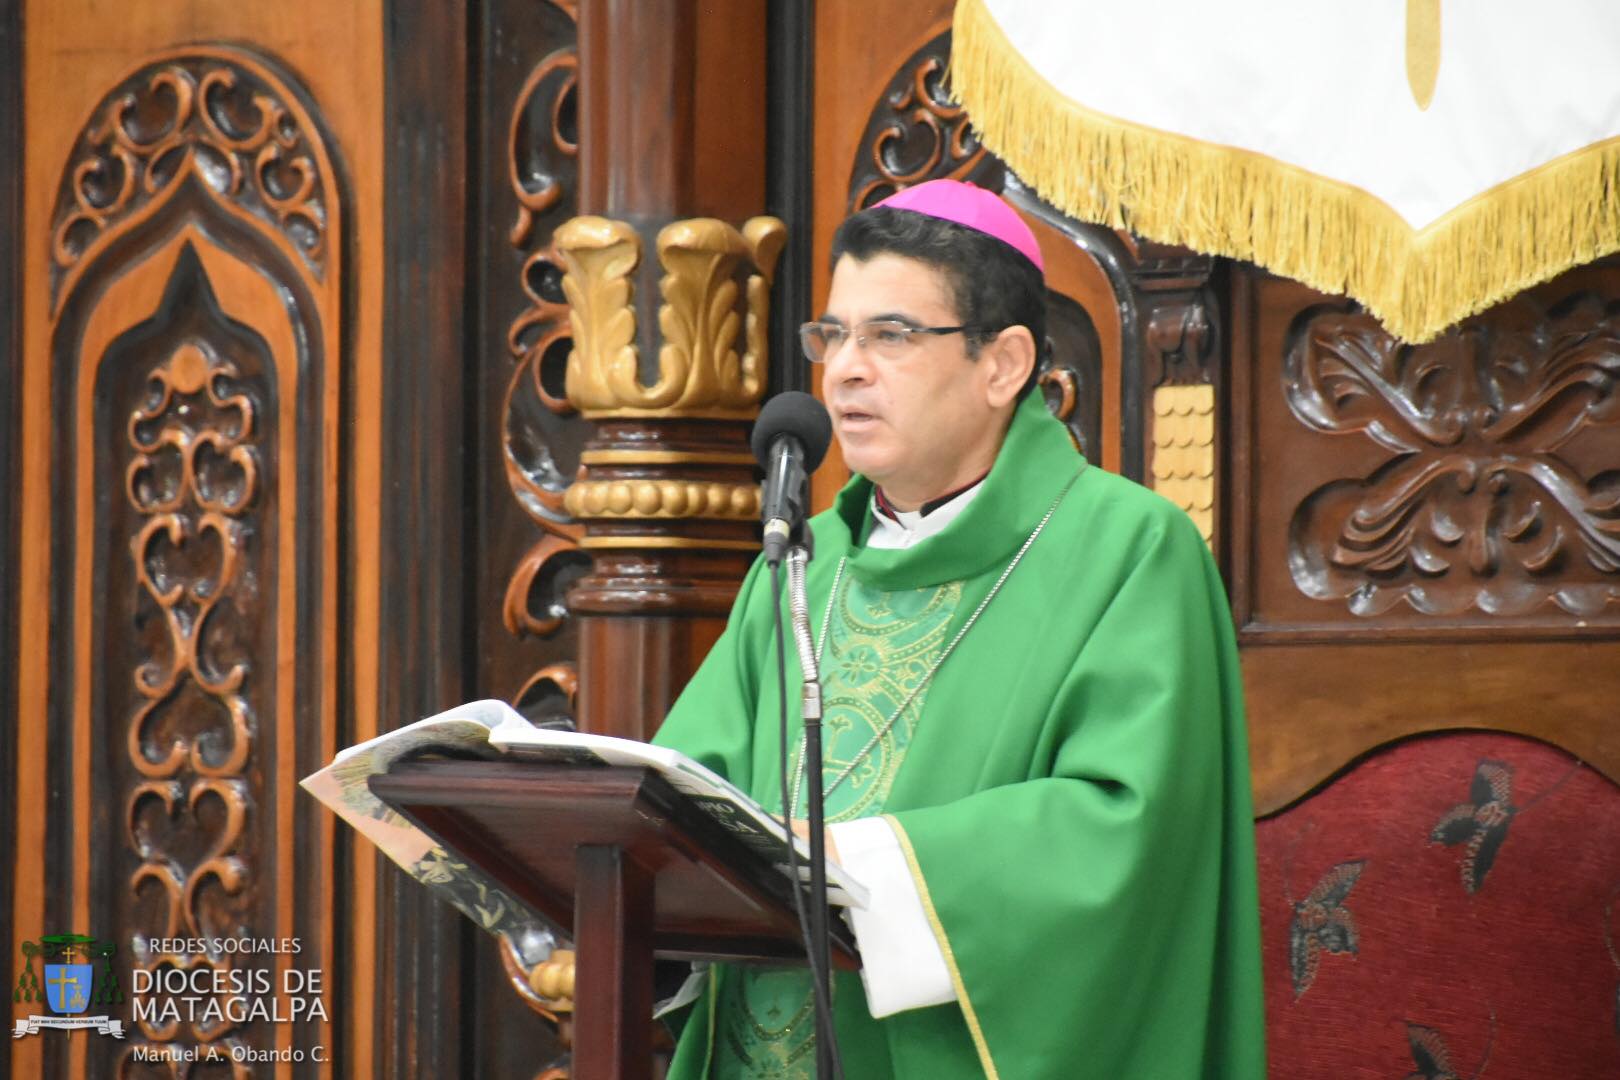 Brother Pablo María implores for the release of Monsignor Álvarez